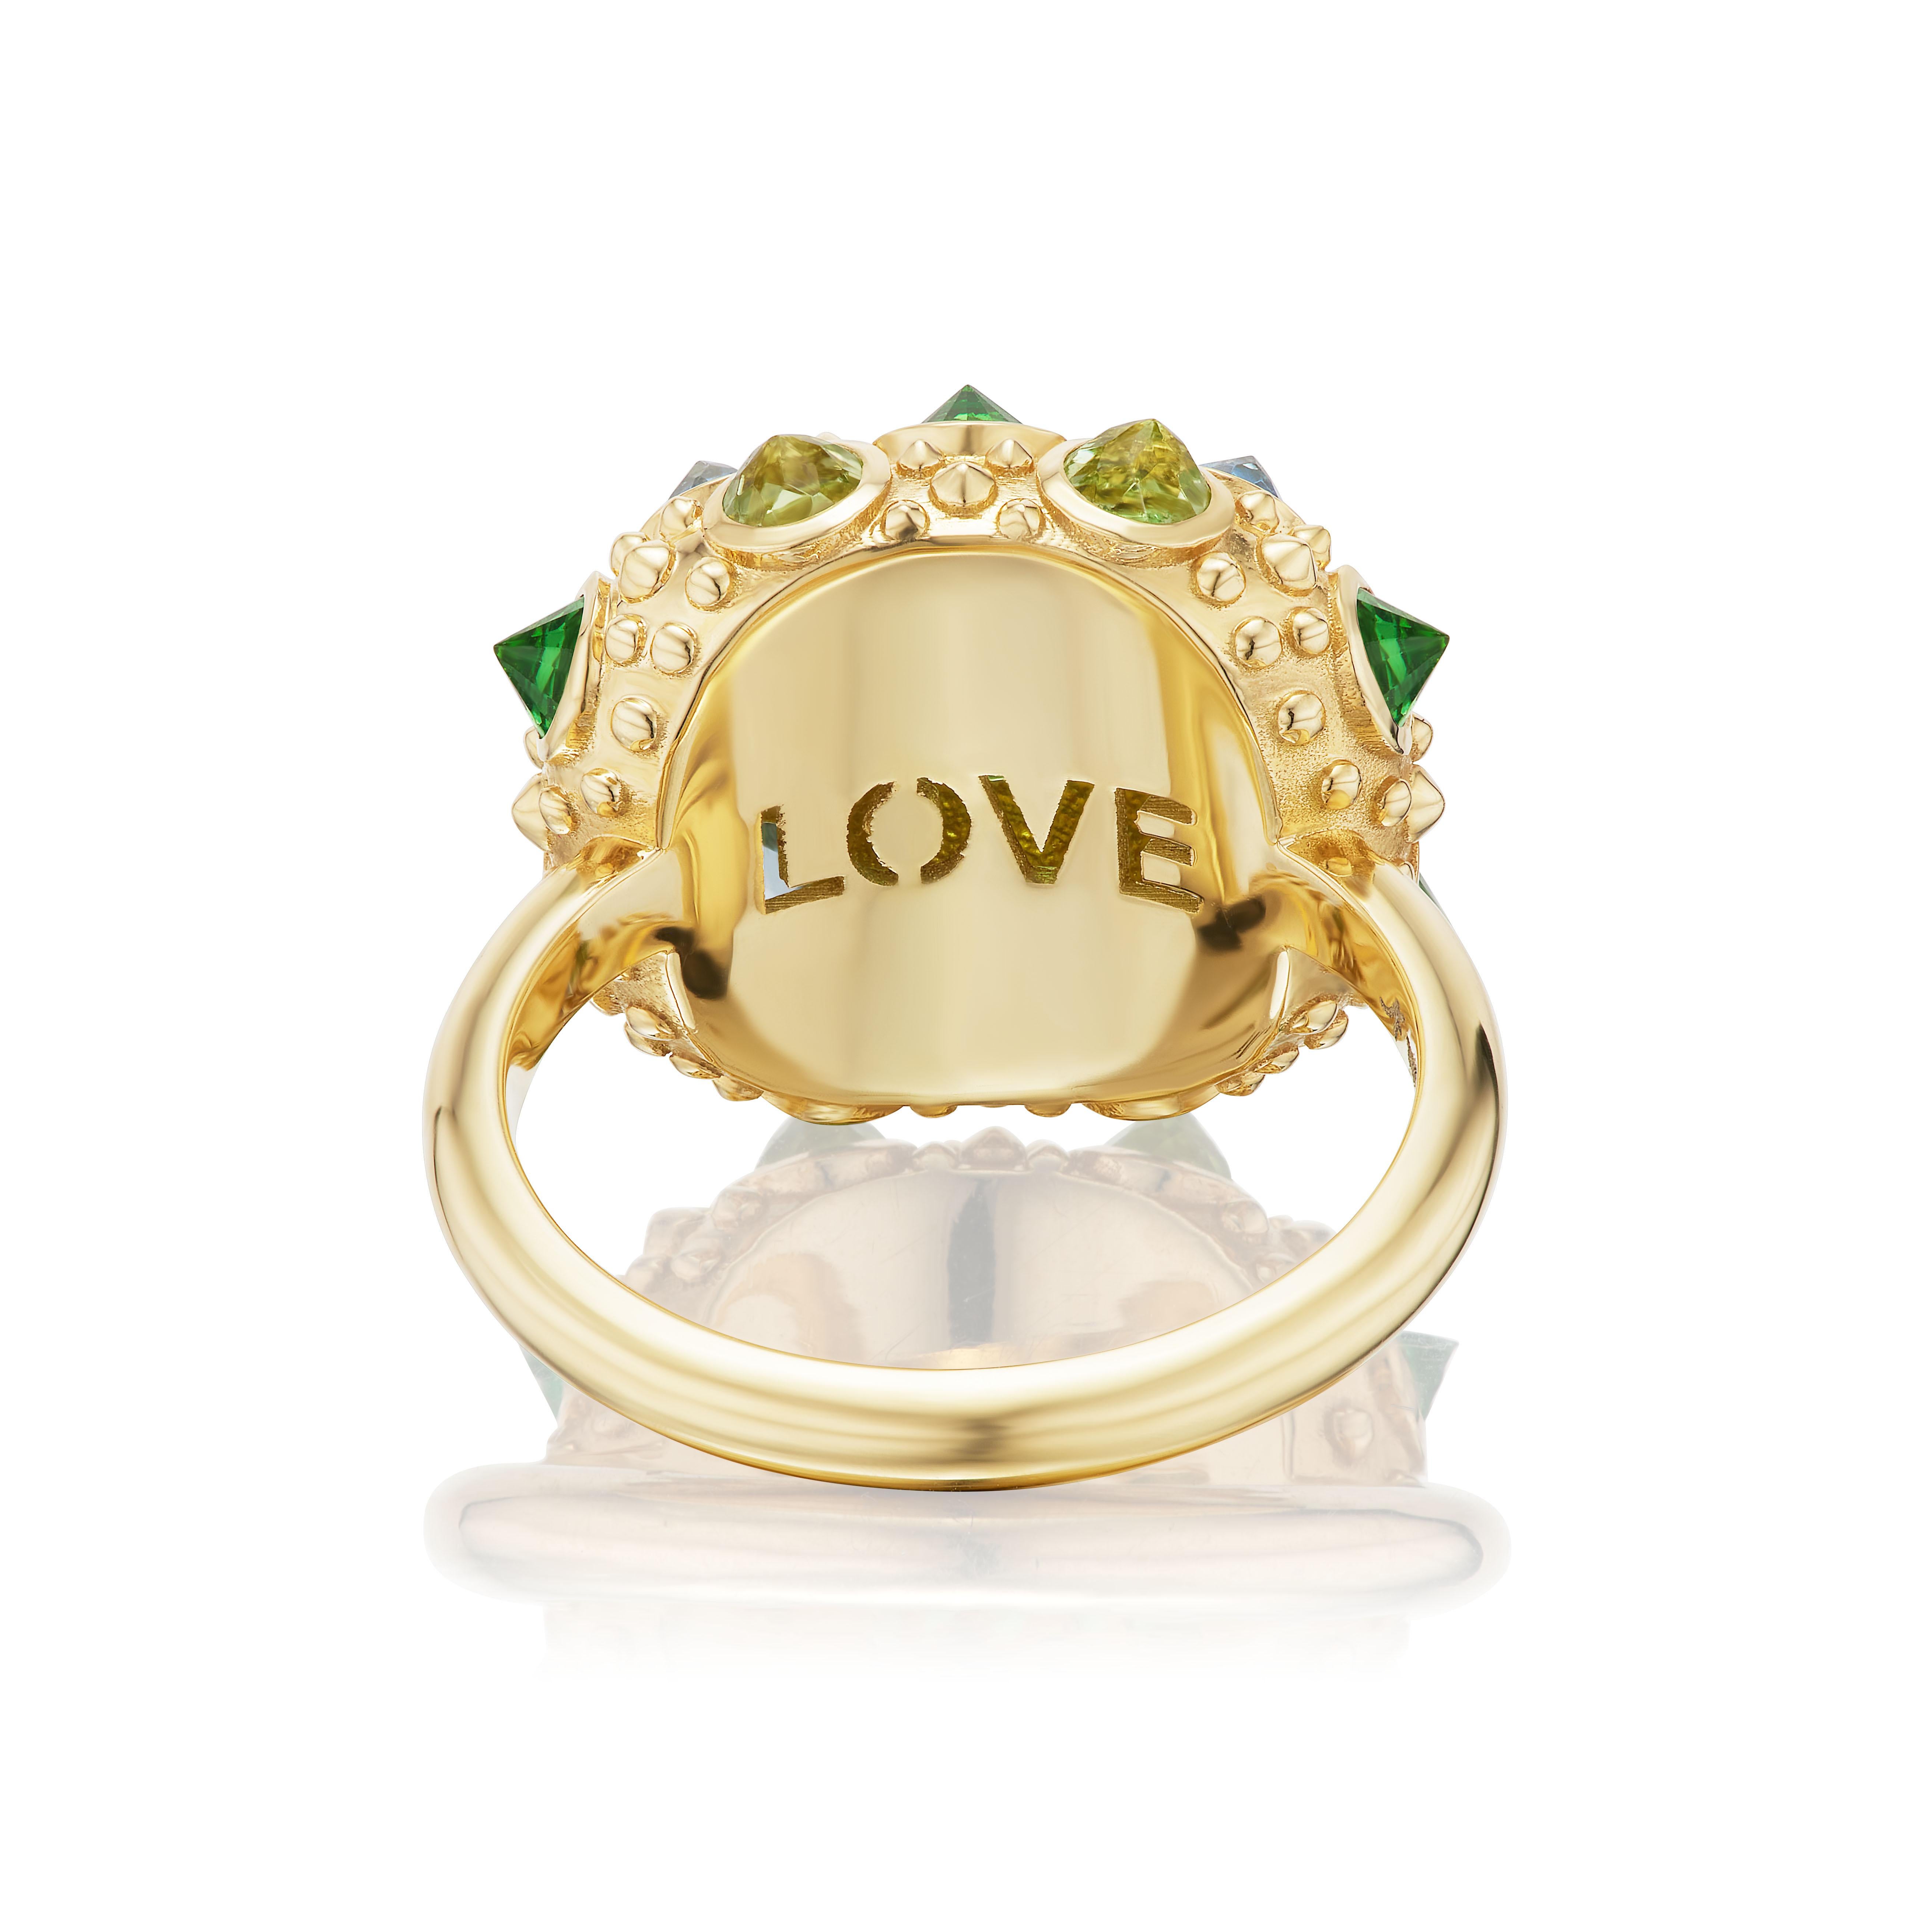 Brilliant Cut AnaKatarina Gold, Tsavorite, Aquamarine, Peridot 'Getting' Ready for Love' Ring For Sale